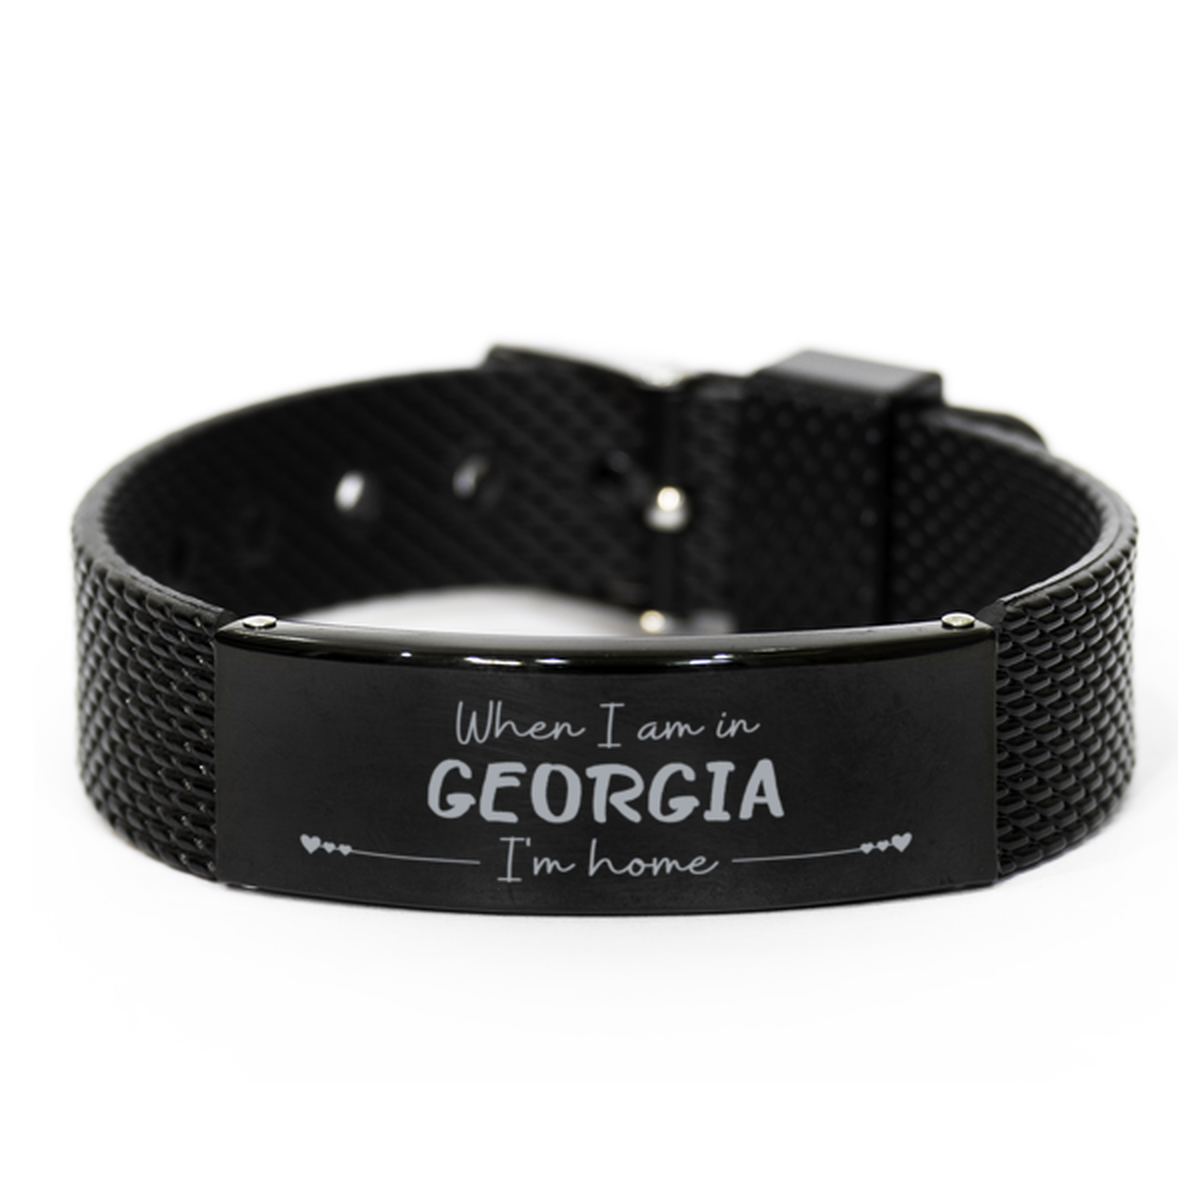 When I am in Georgia I'm home Black Shark Mesh Bracelet, Cheap Gifts For Georgia, State Georgia Birthday Gifts for Friends Coworker